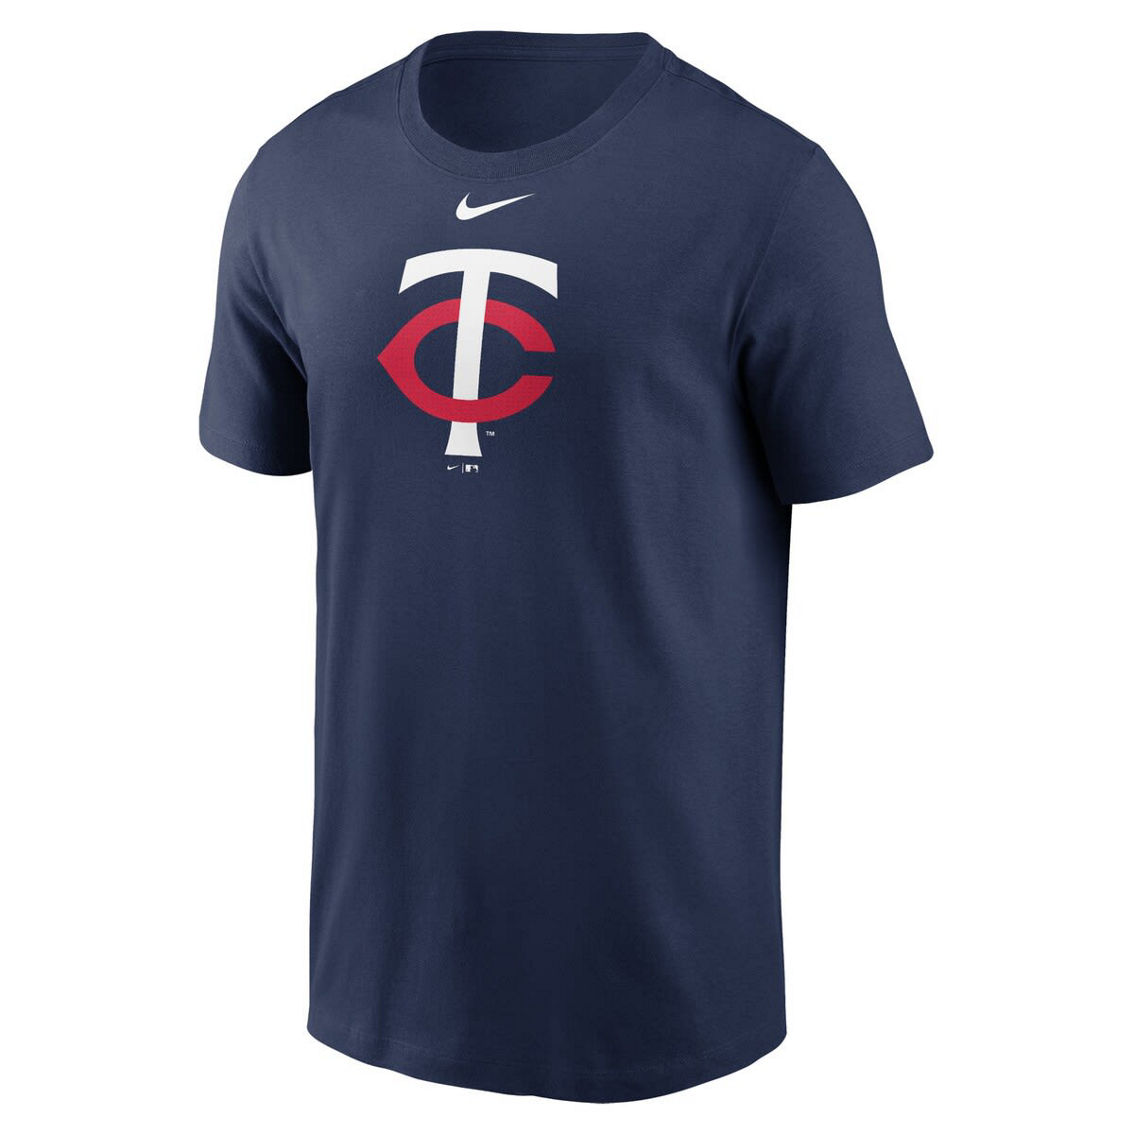 Nike Men's Navy Minnesota Twins Fuse Logo T-Shirt - Image 3 of 4